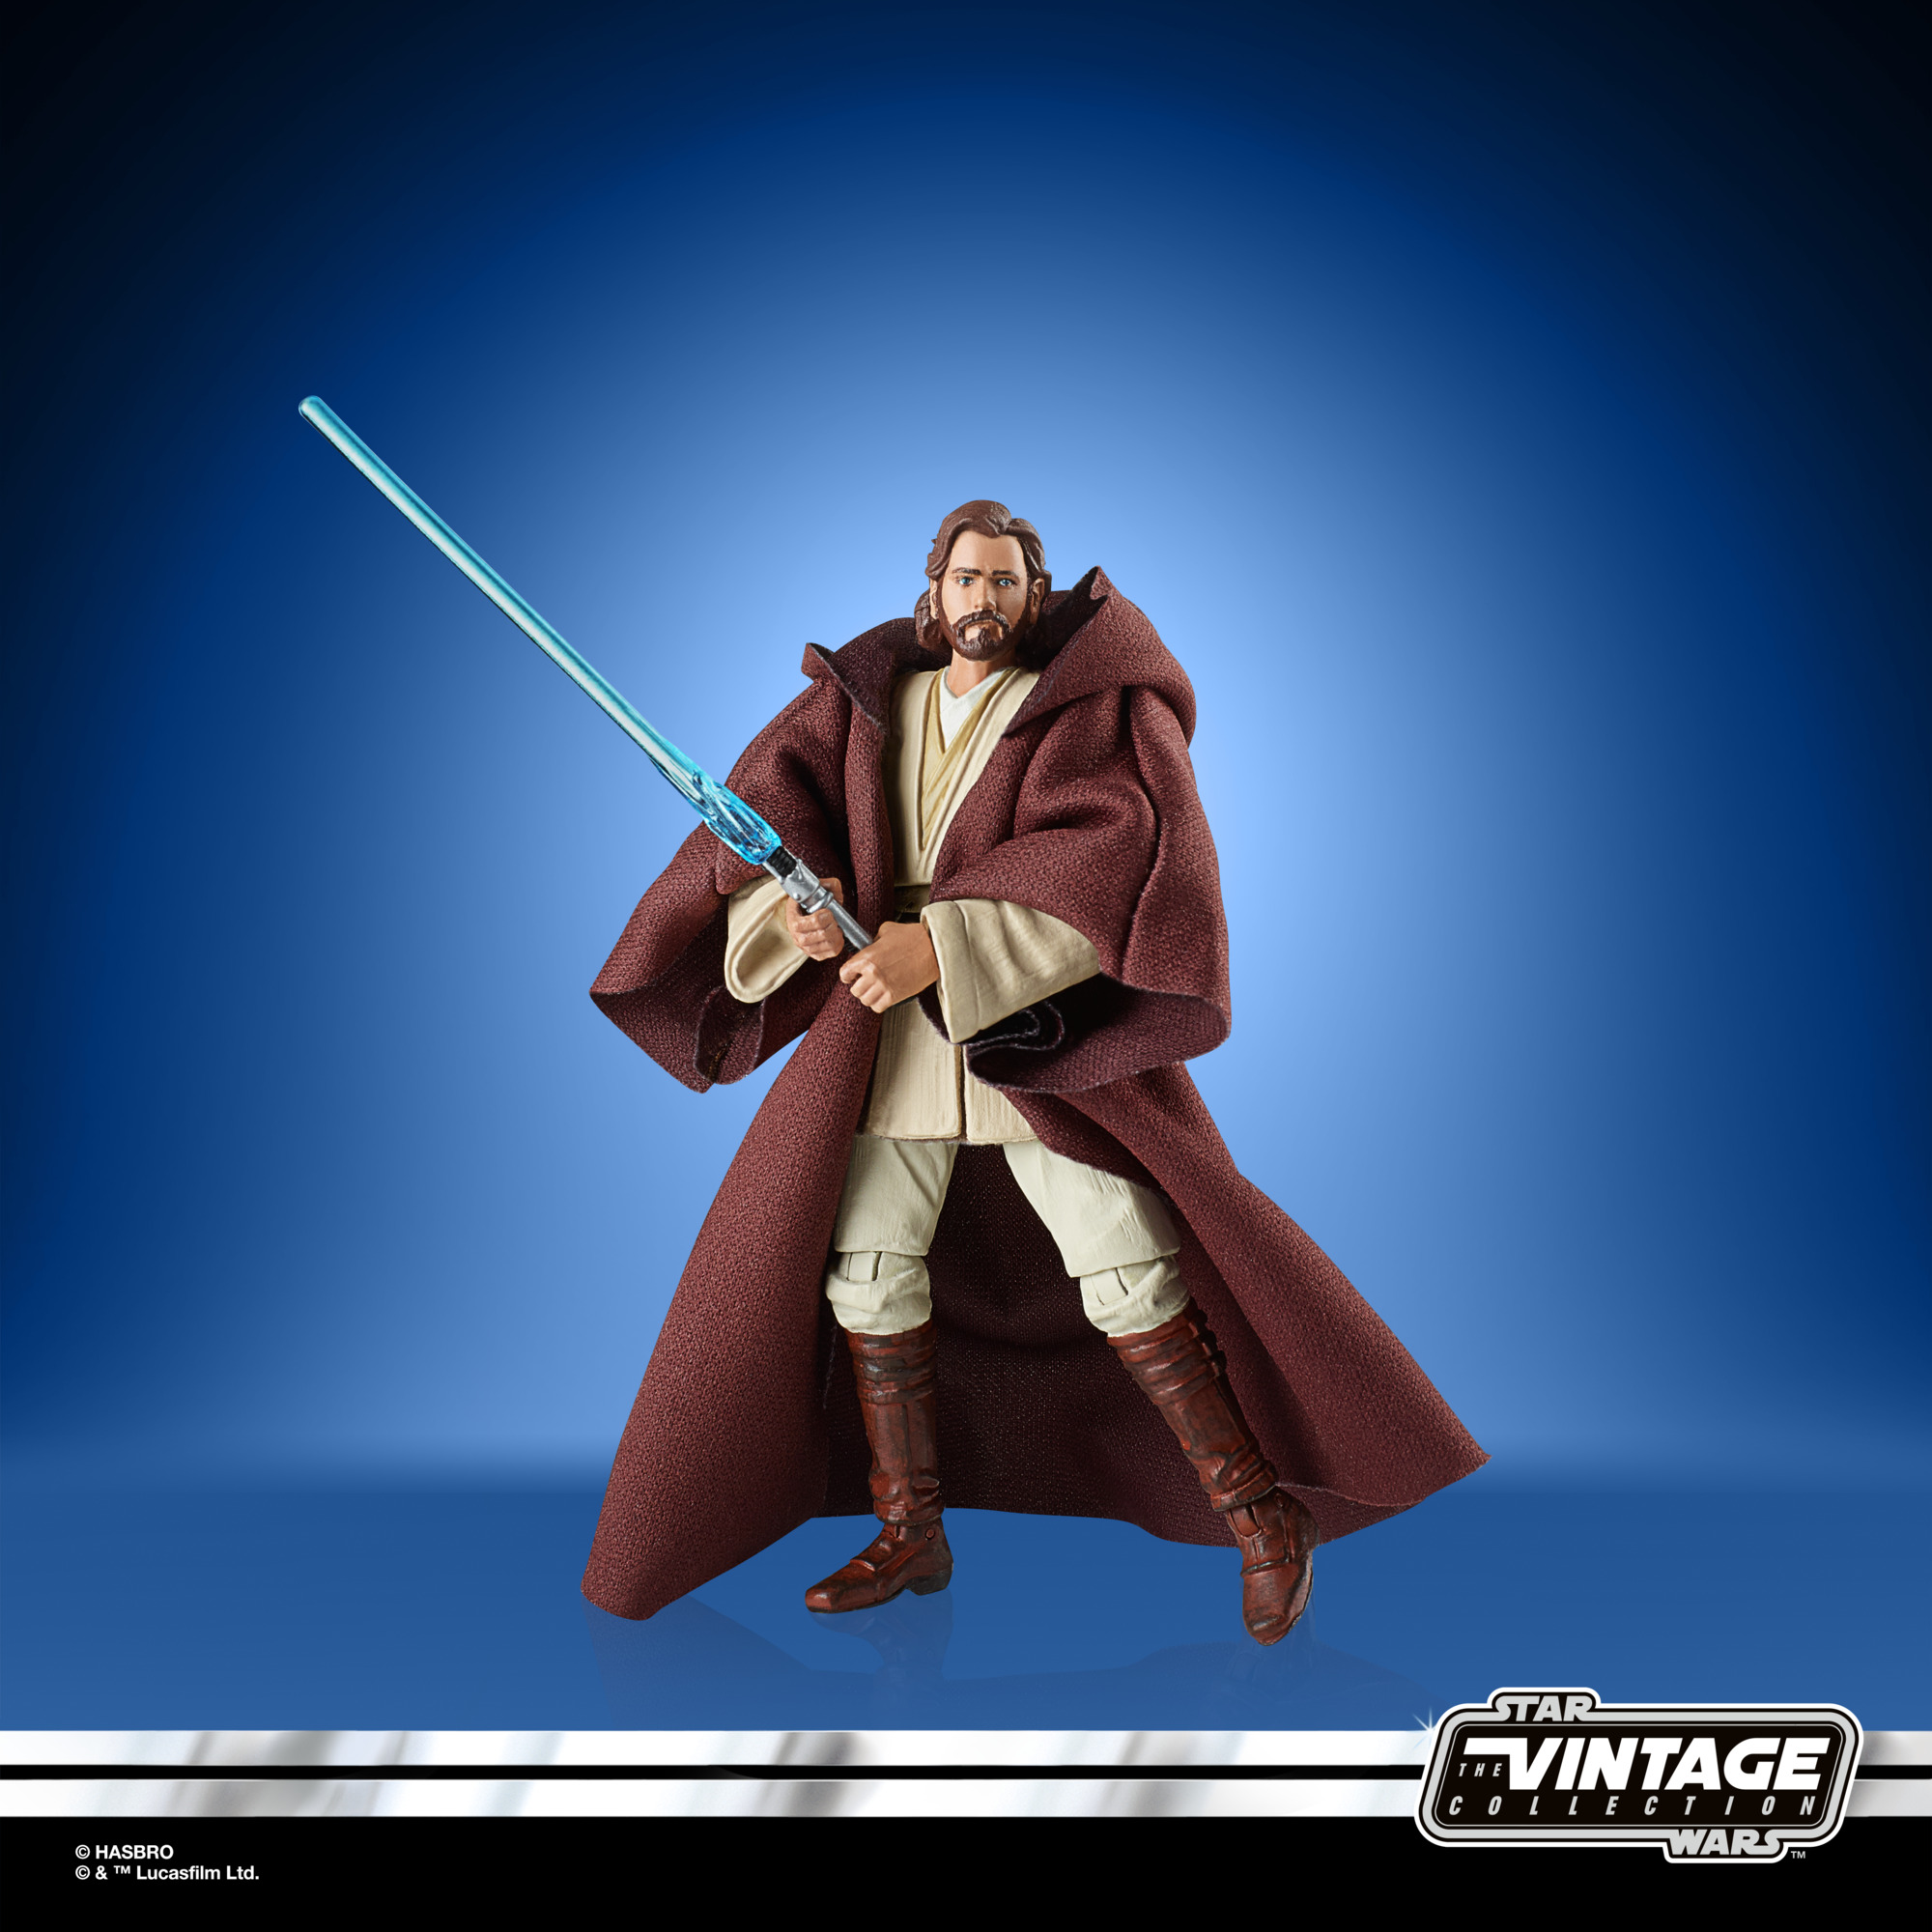 Star Wars The Vintage Collection Actionfigur 2022 Obi-Wan Kenobi F44925X0 5010993964581